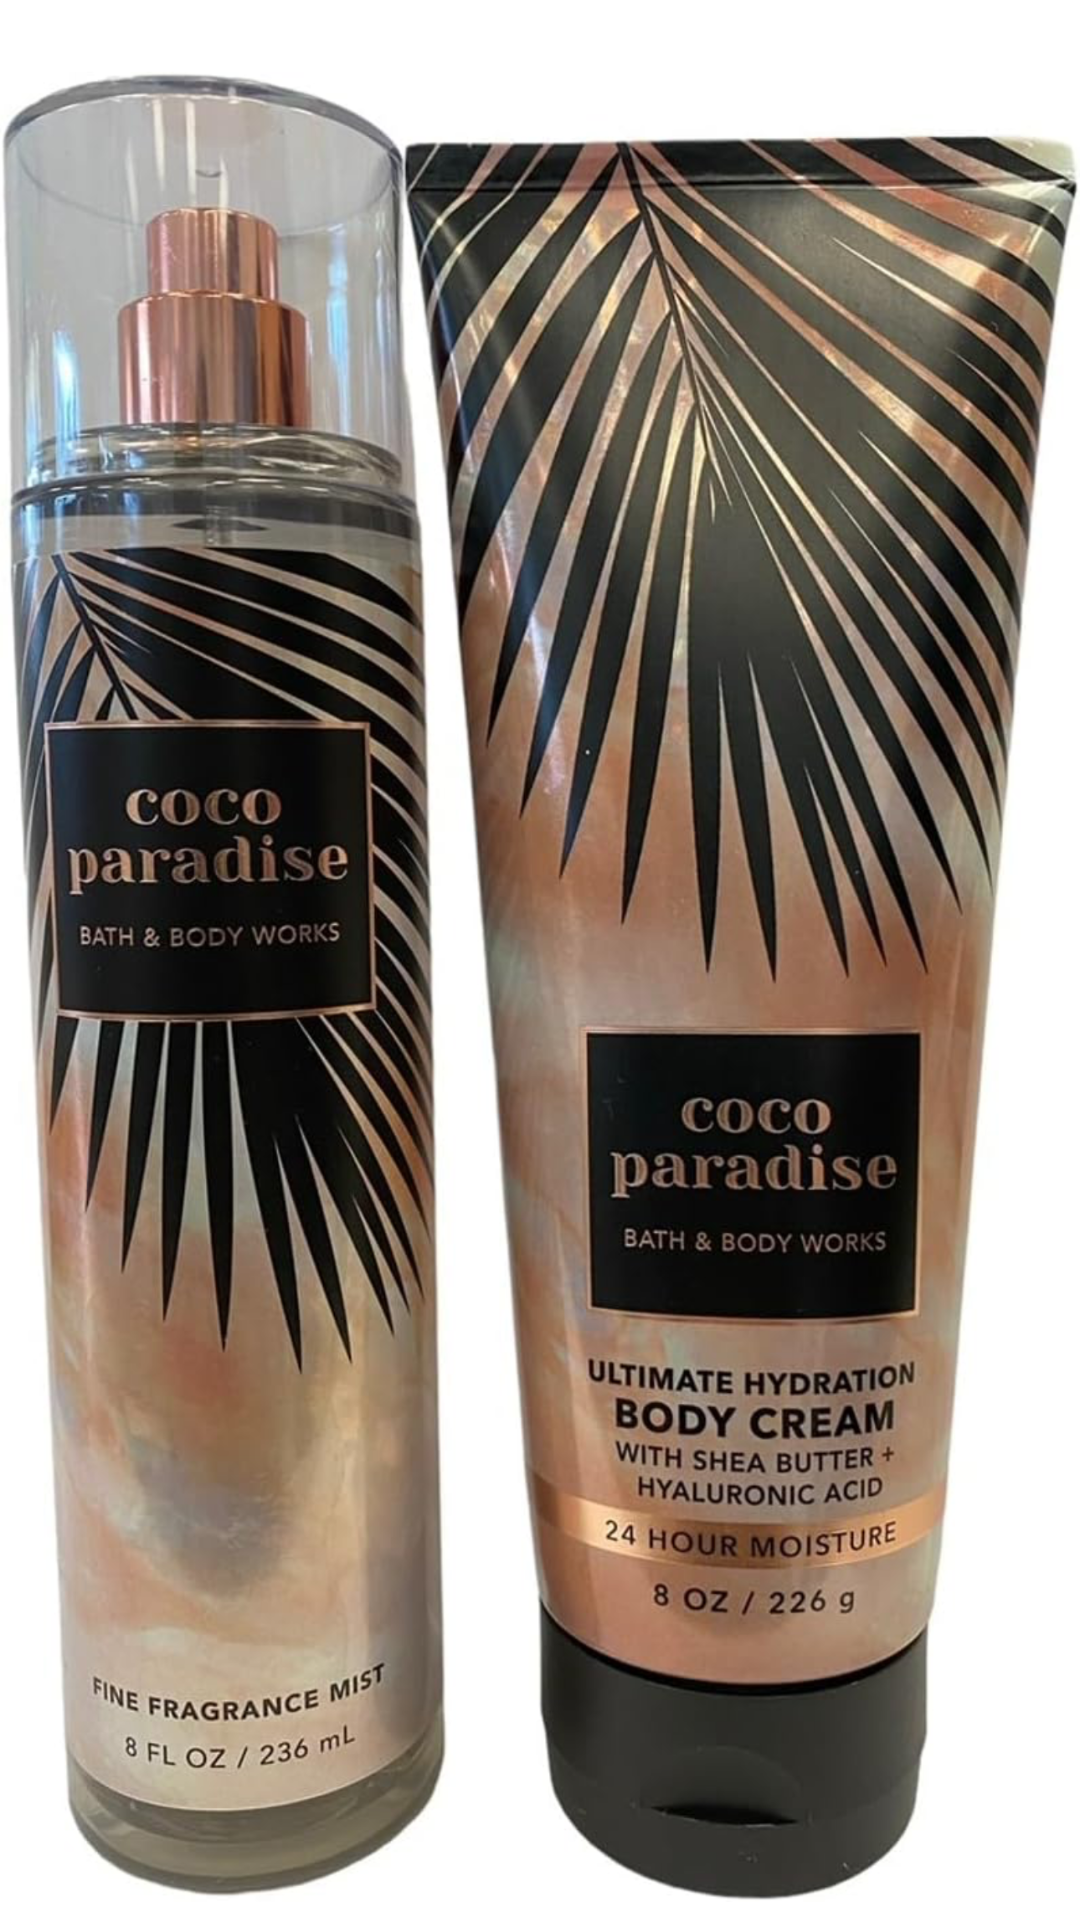 NEW Bath & Body Works Coco Paradise